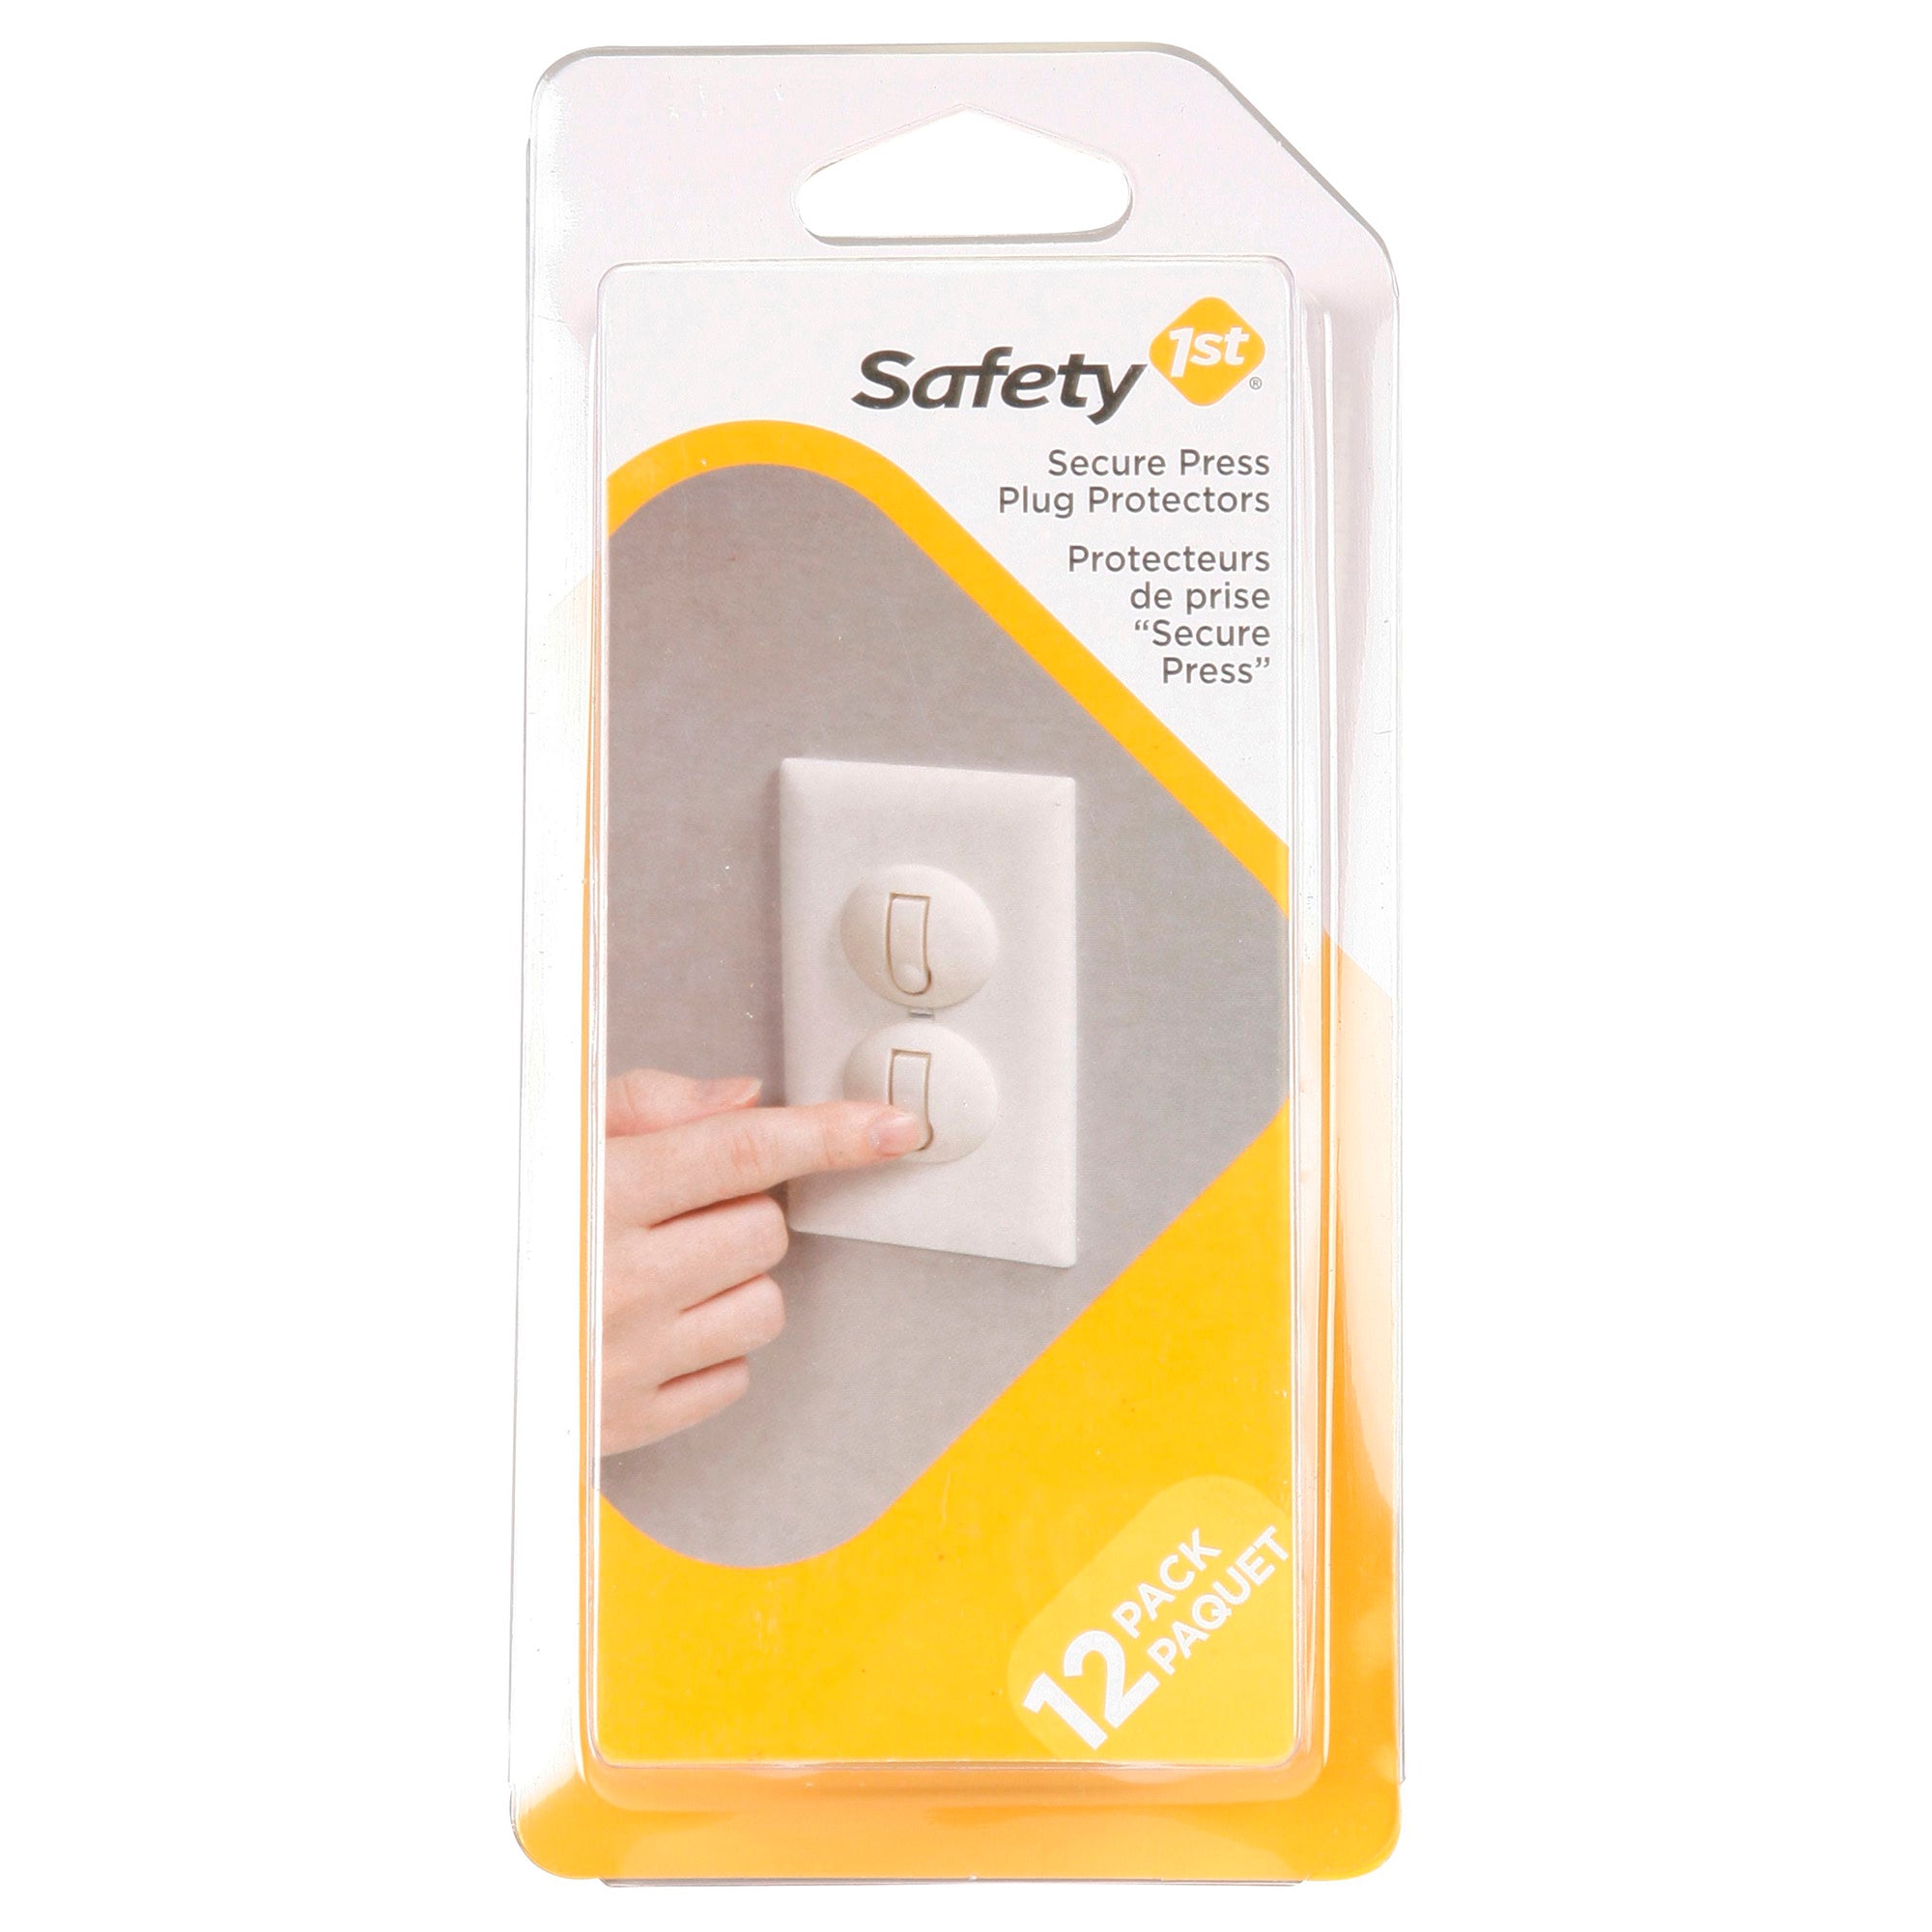 Secure Press Plug Protectors - White